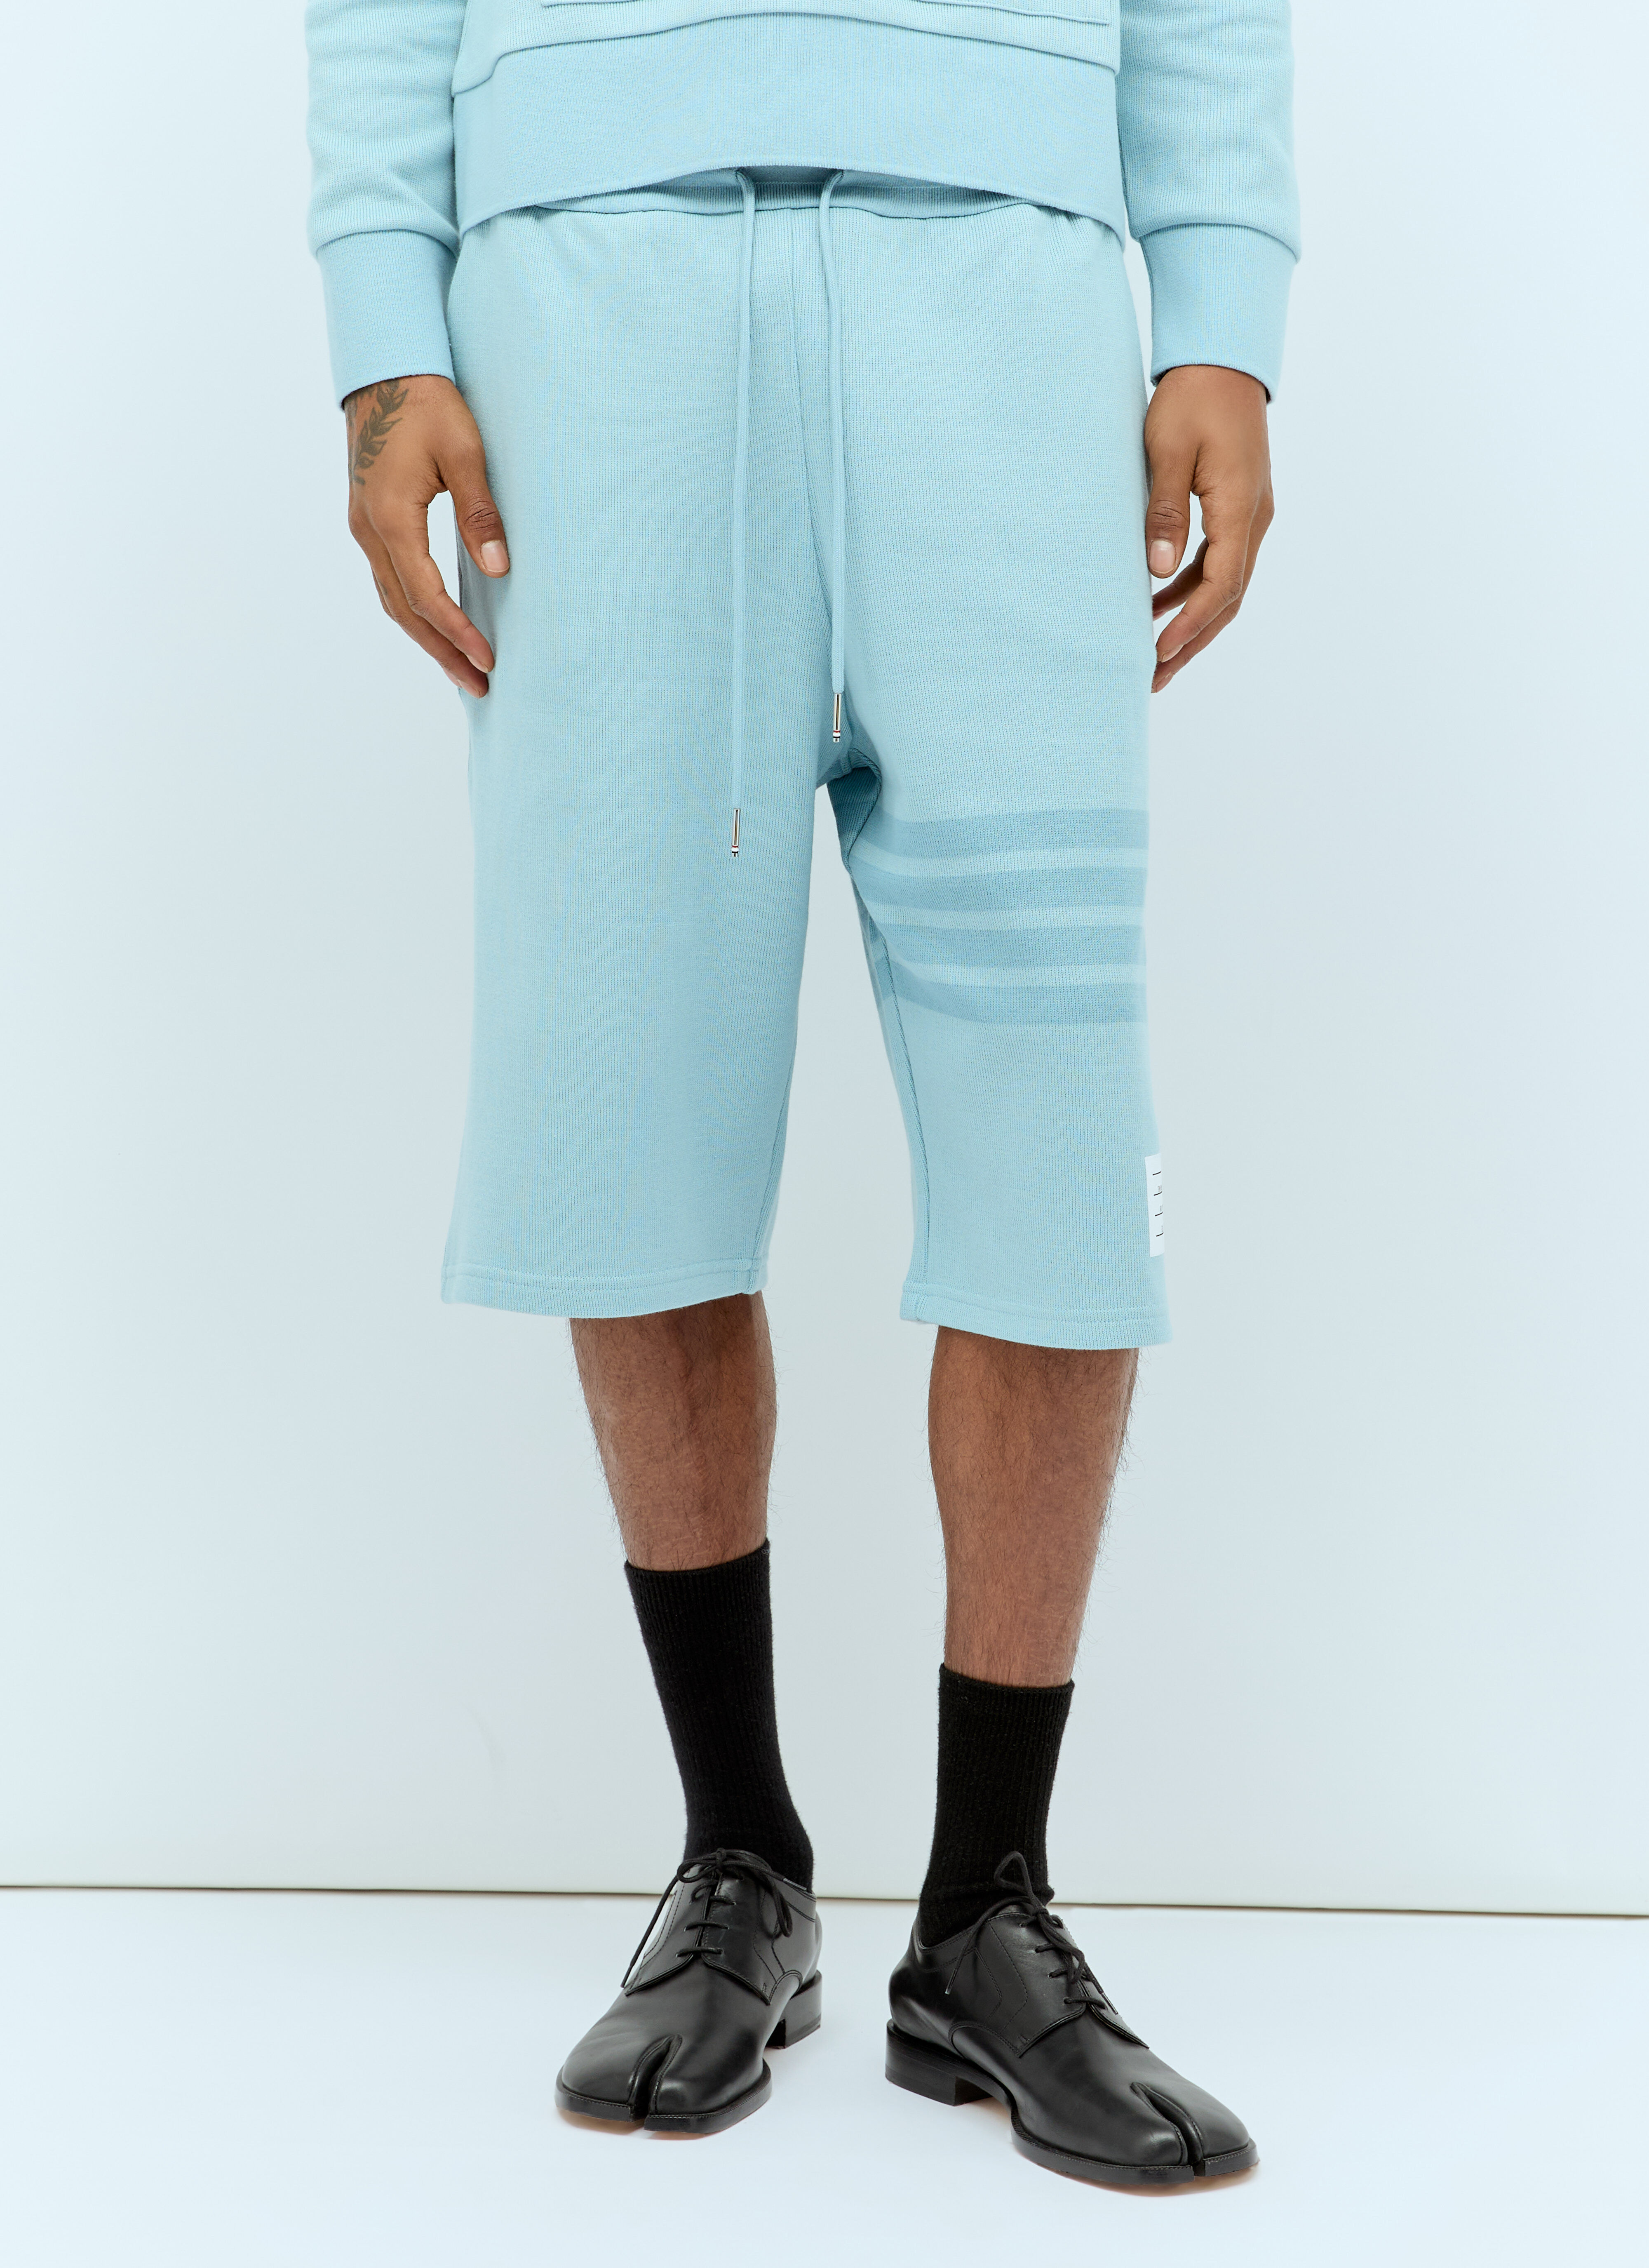 Rick Owens x Champion Knit Track Shorts Black roc0157004